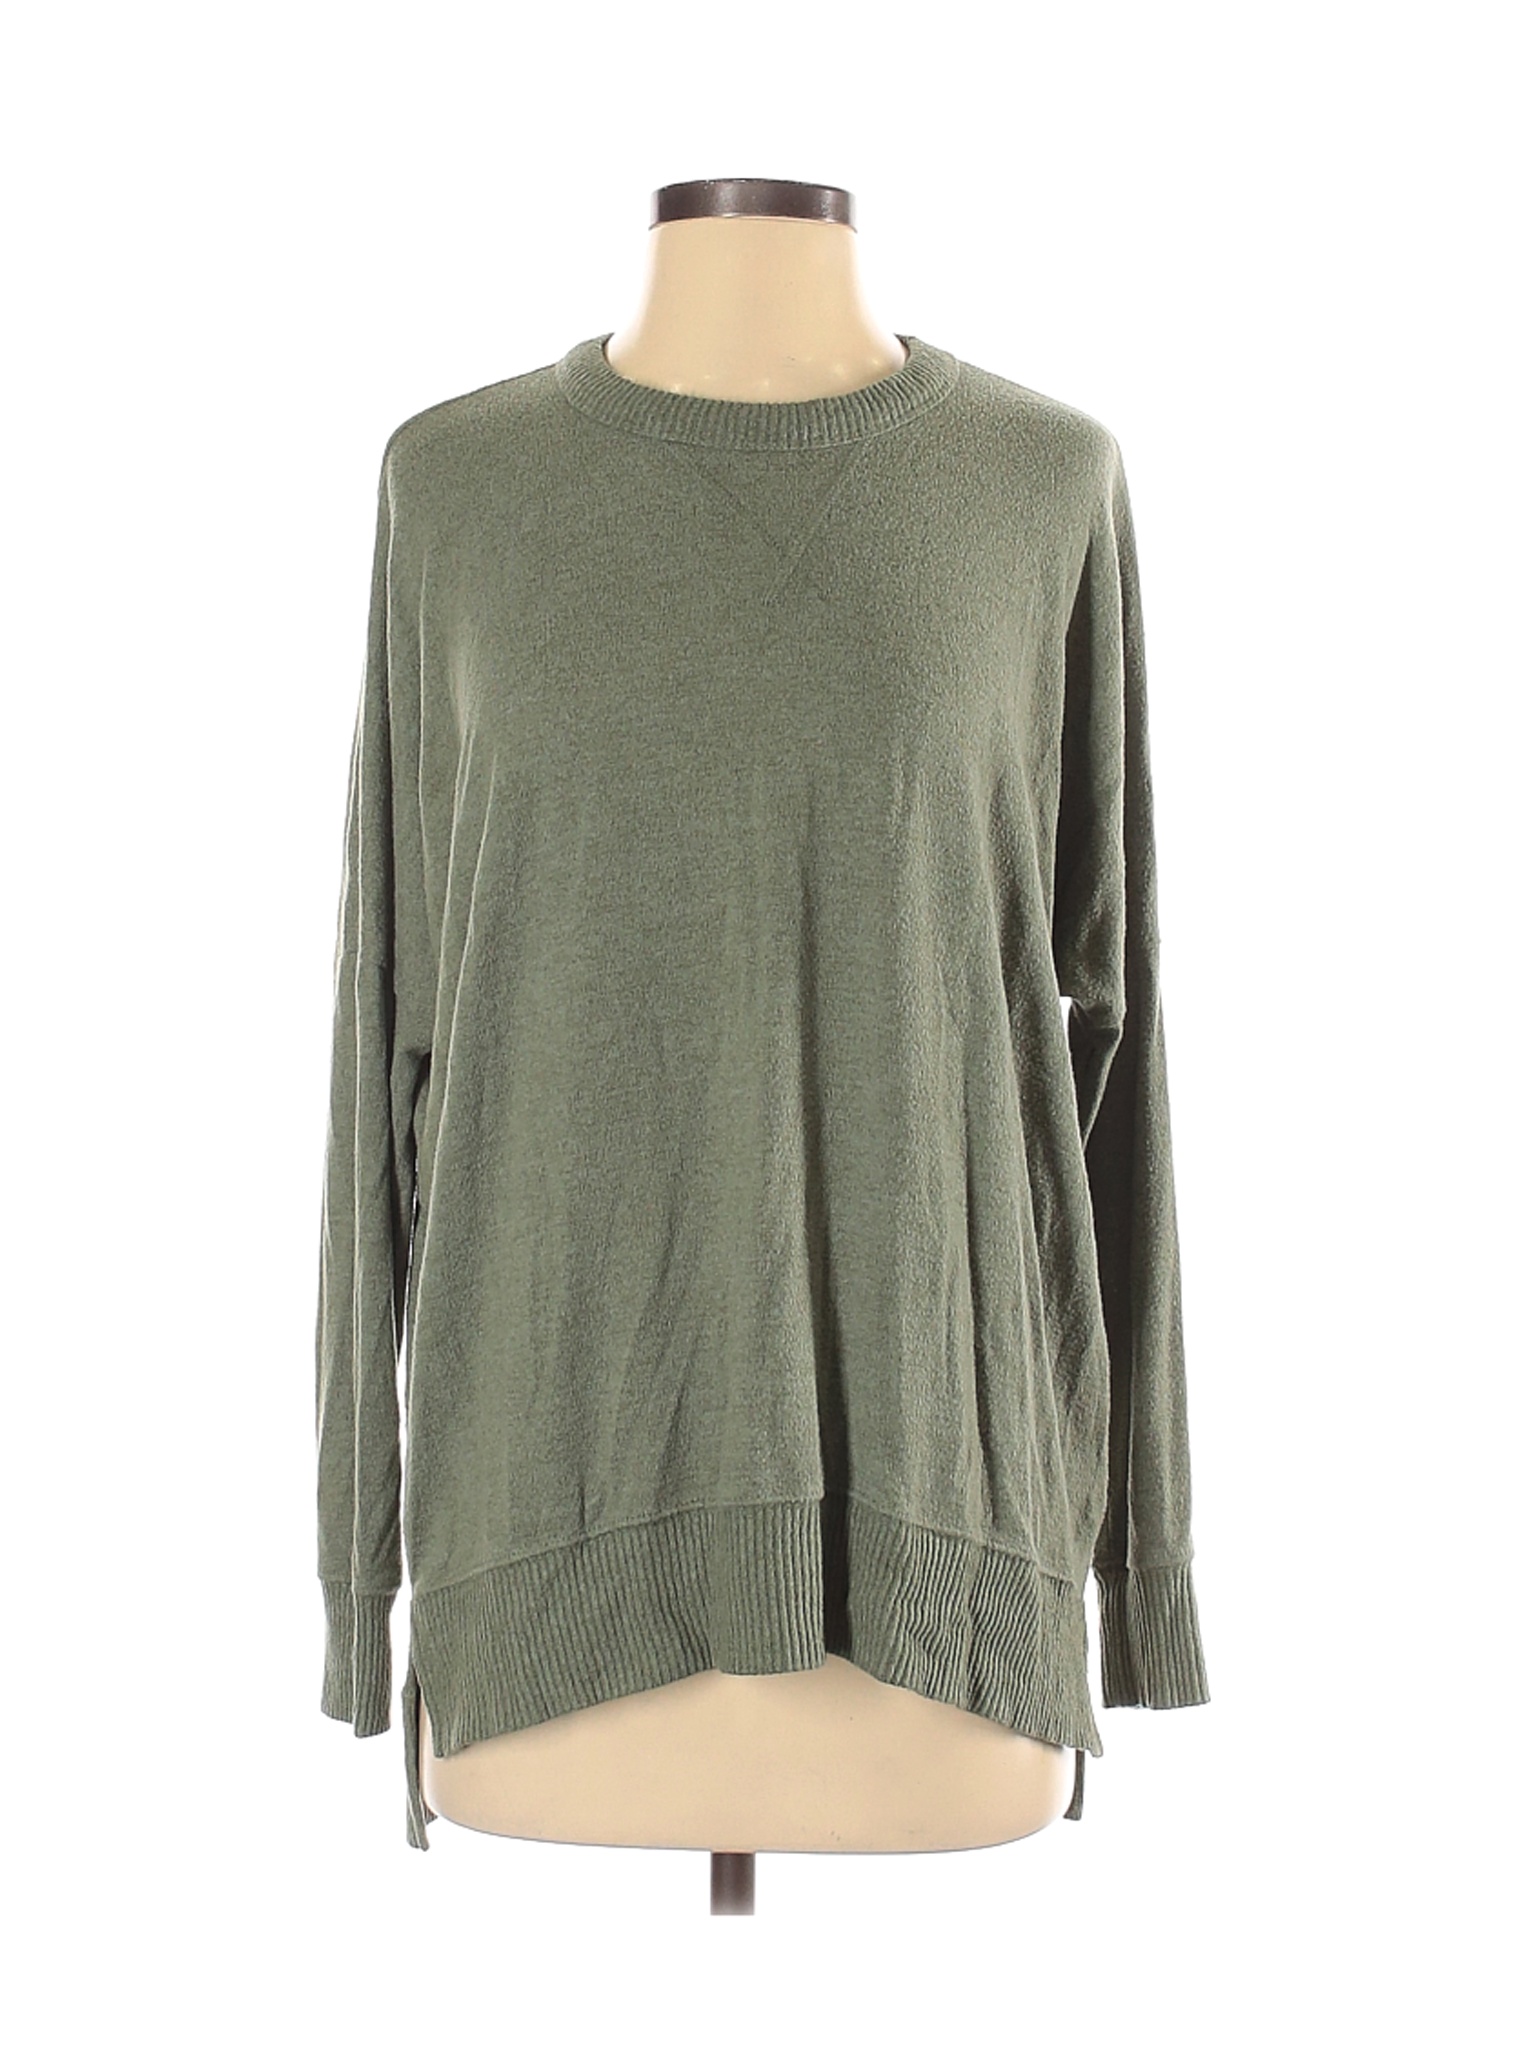 Aerie Women Green Pullover Sweater XS | eBay